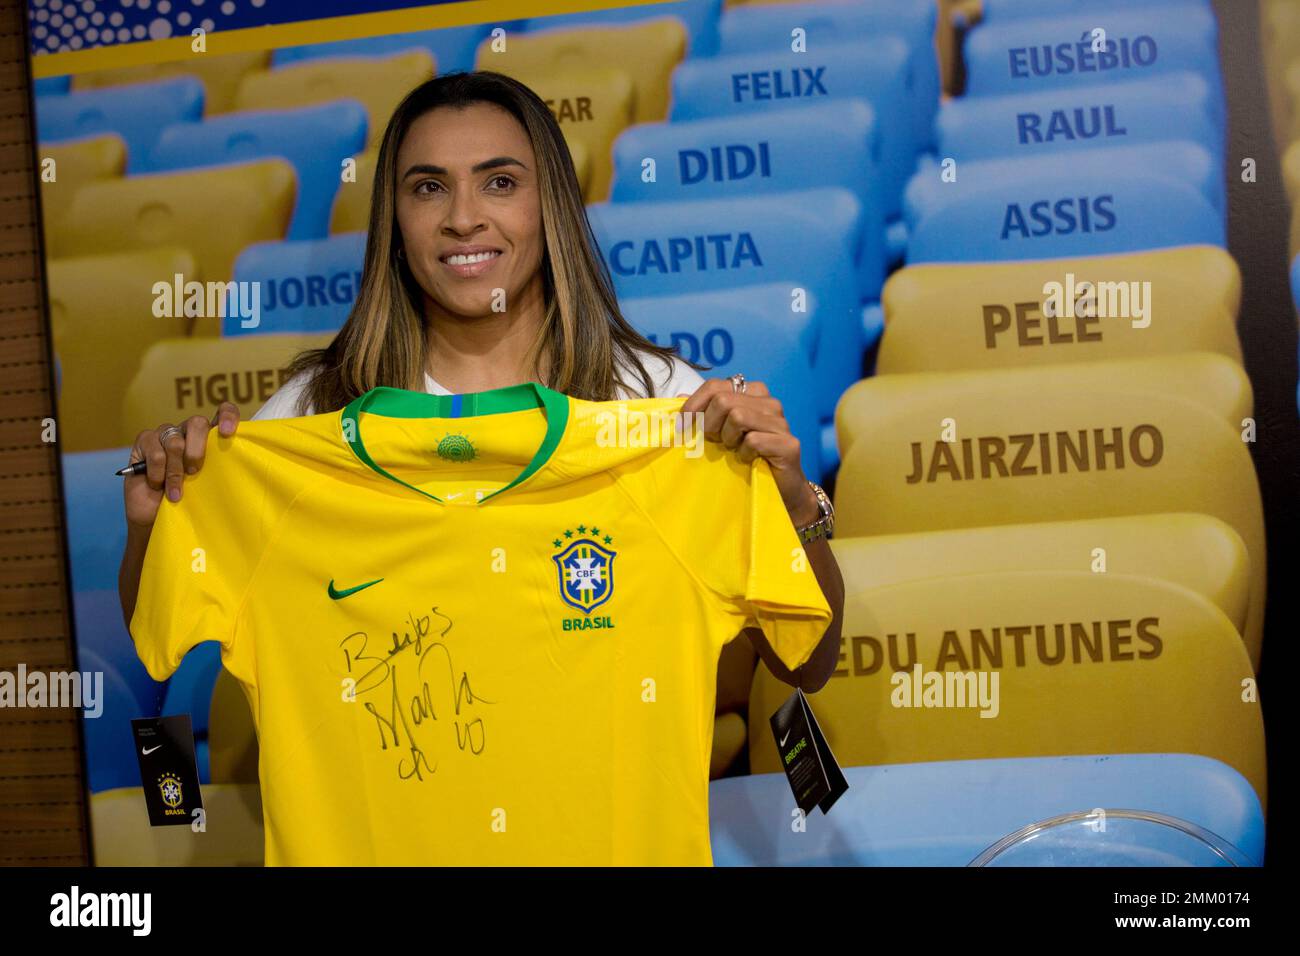 https://c8.alamy.com/comp/2MM0174/brazils-marta-holds-a-brazils-national-jersey-before-making-footprints-of-her-feet-that-will-be-placed-on-brazils-soccer-walk-of-fame-at-the-maracana-stadium-in-rio-de-janeiro-brazil-monday-dec-10-2018-marta-has-been-named-the-best-fifa-womens-player-six-times-ap-photosilvia-izquierdo-2MM0174.jpg